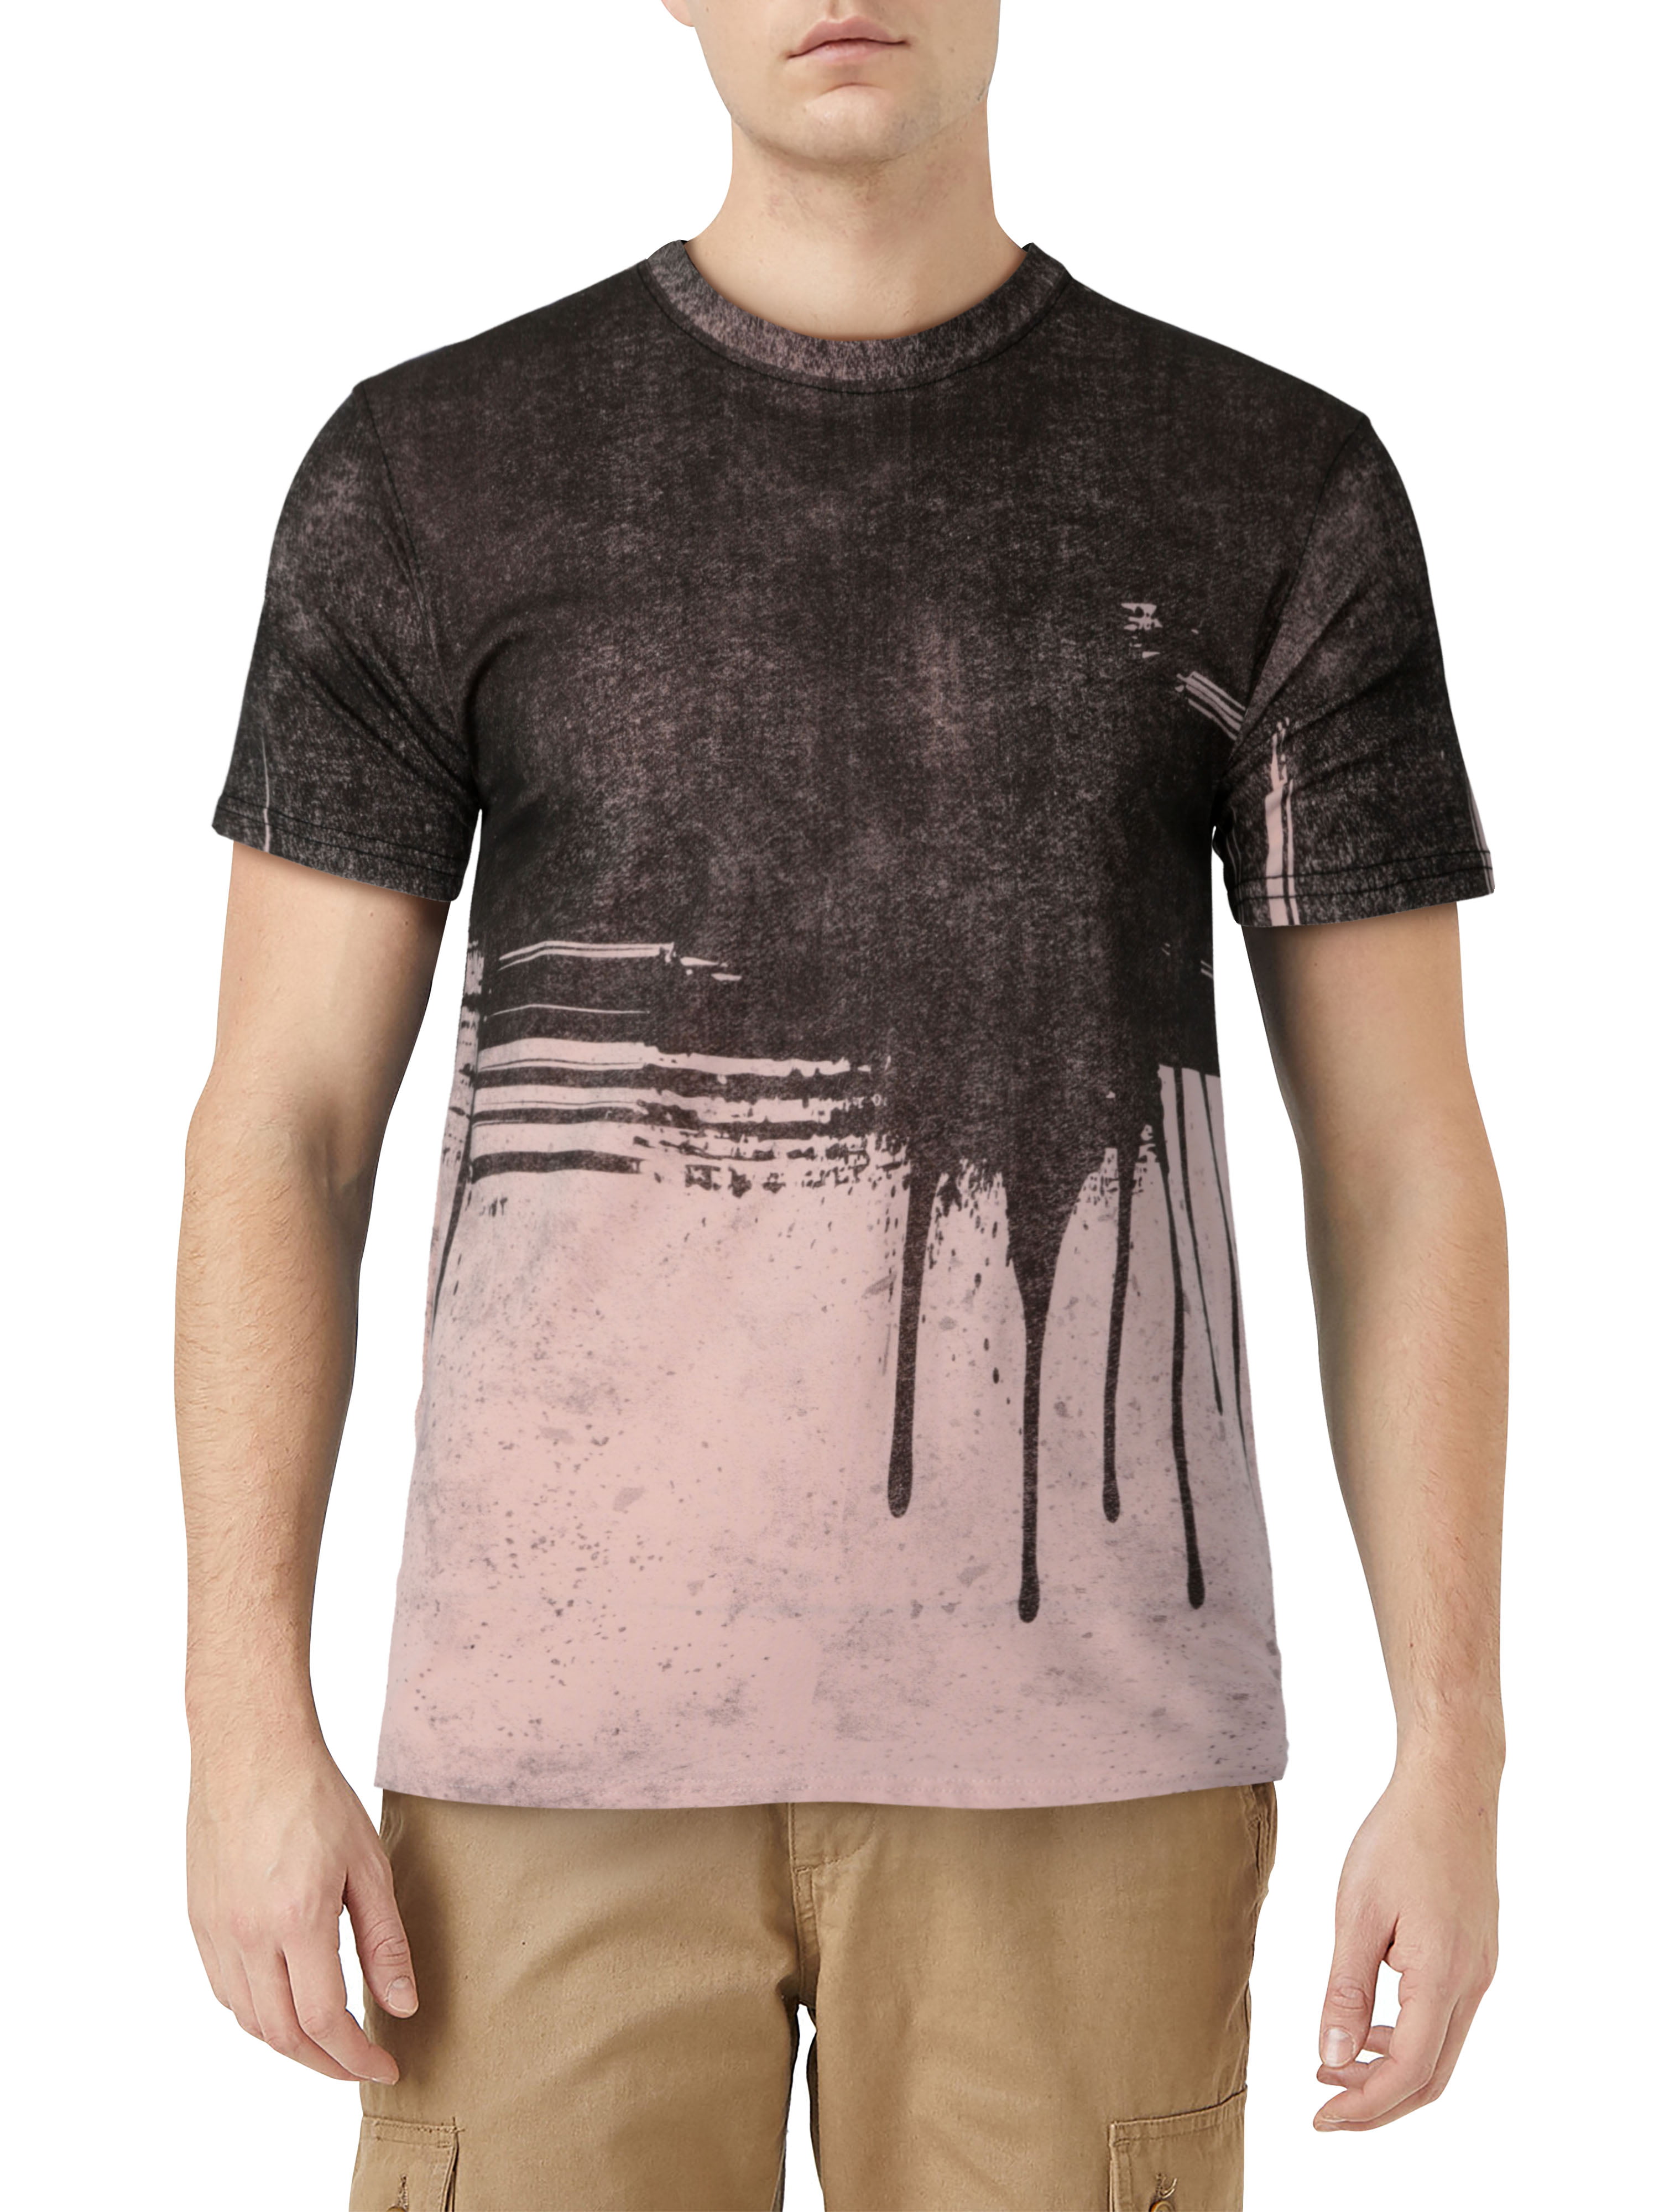 New Men's Premium T-Shirts Short Sleeve Tee Shirt Graphic Top for Men 